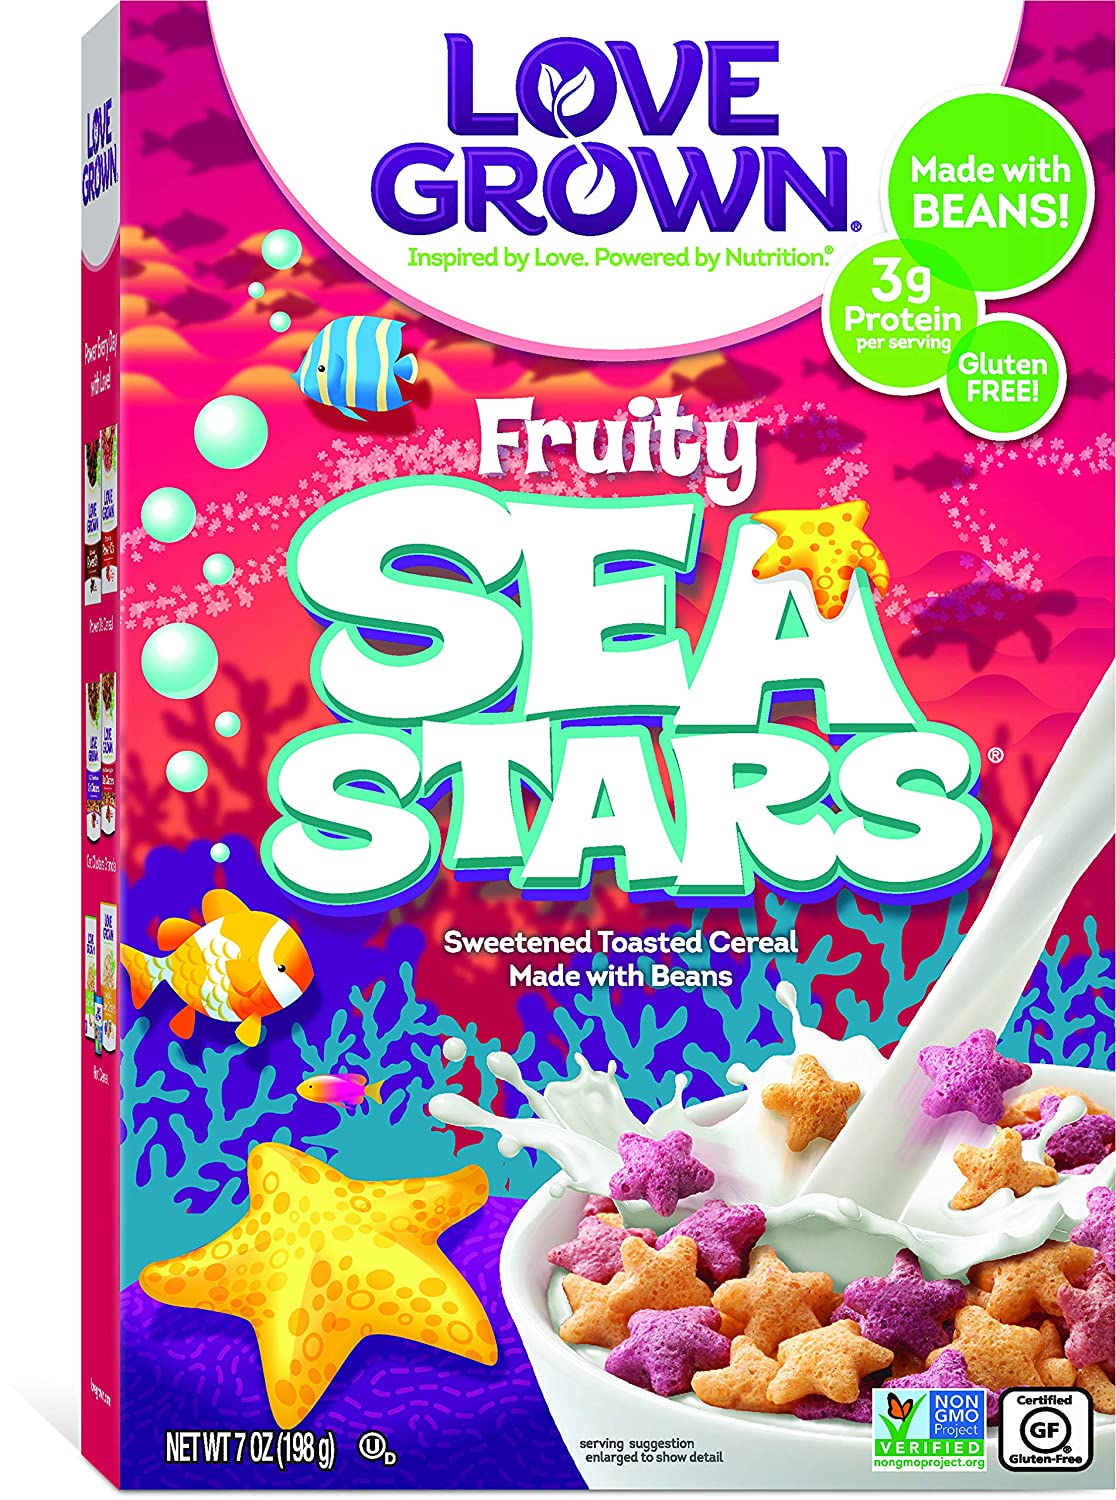 Love Grown, Sea Stars Cereal